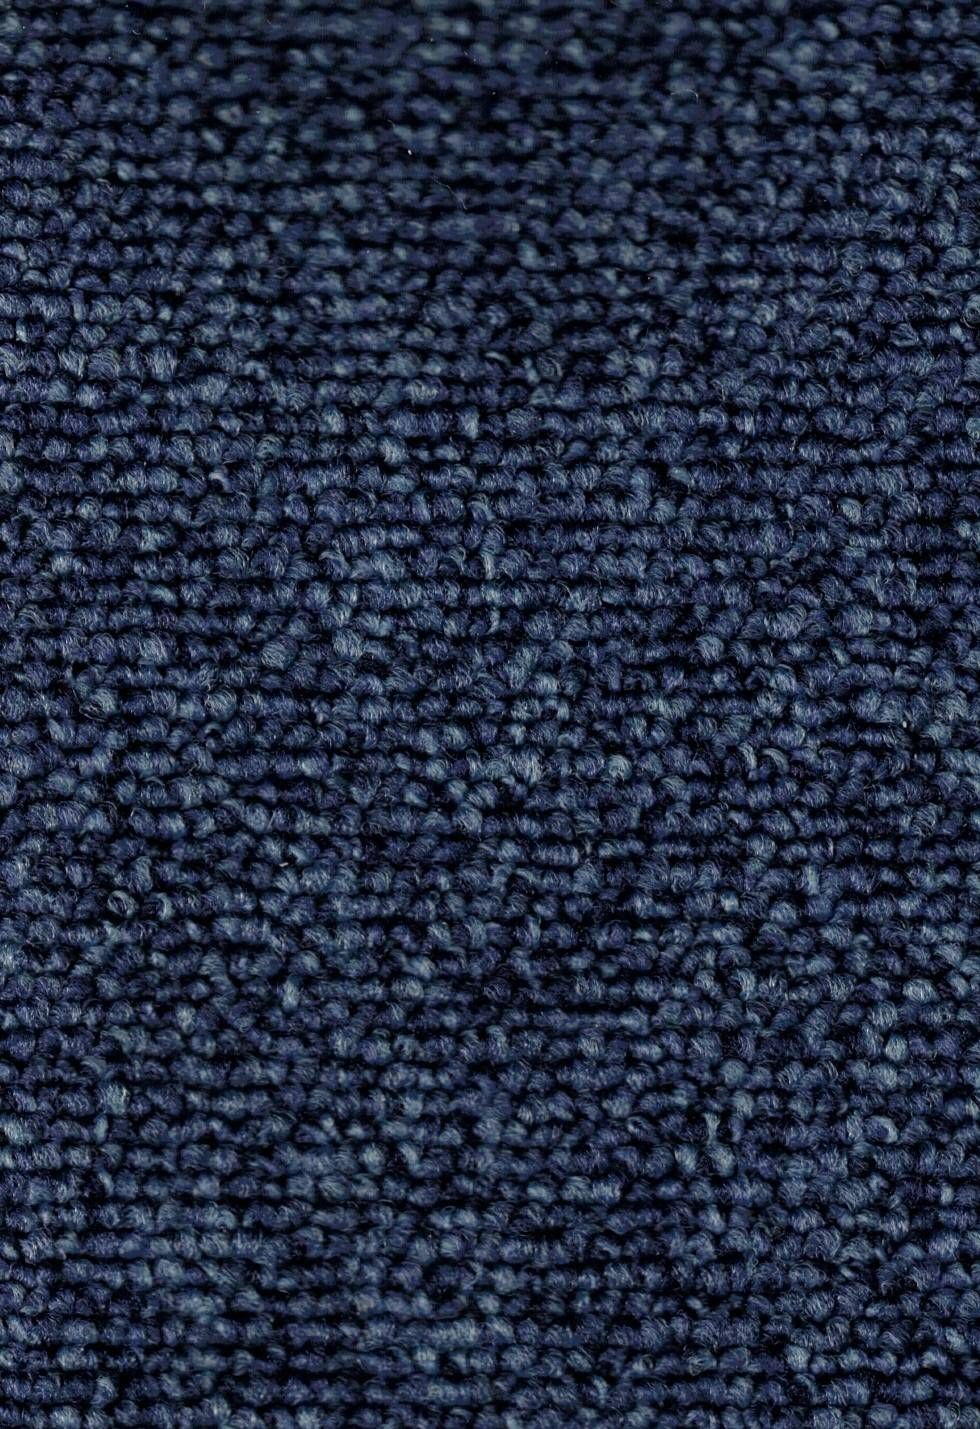 Teppichboden Lano Granit Objektschlinge 700 Jeansblau - Rollenbreite 500 cm